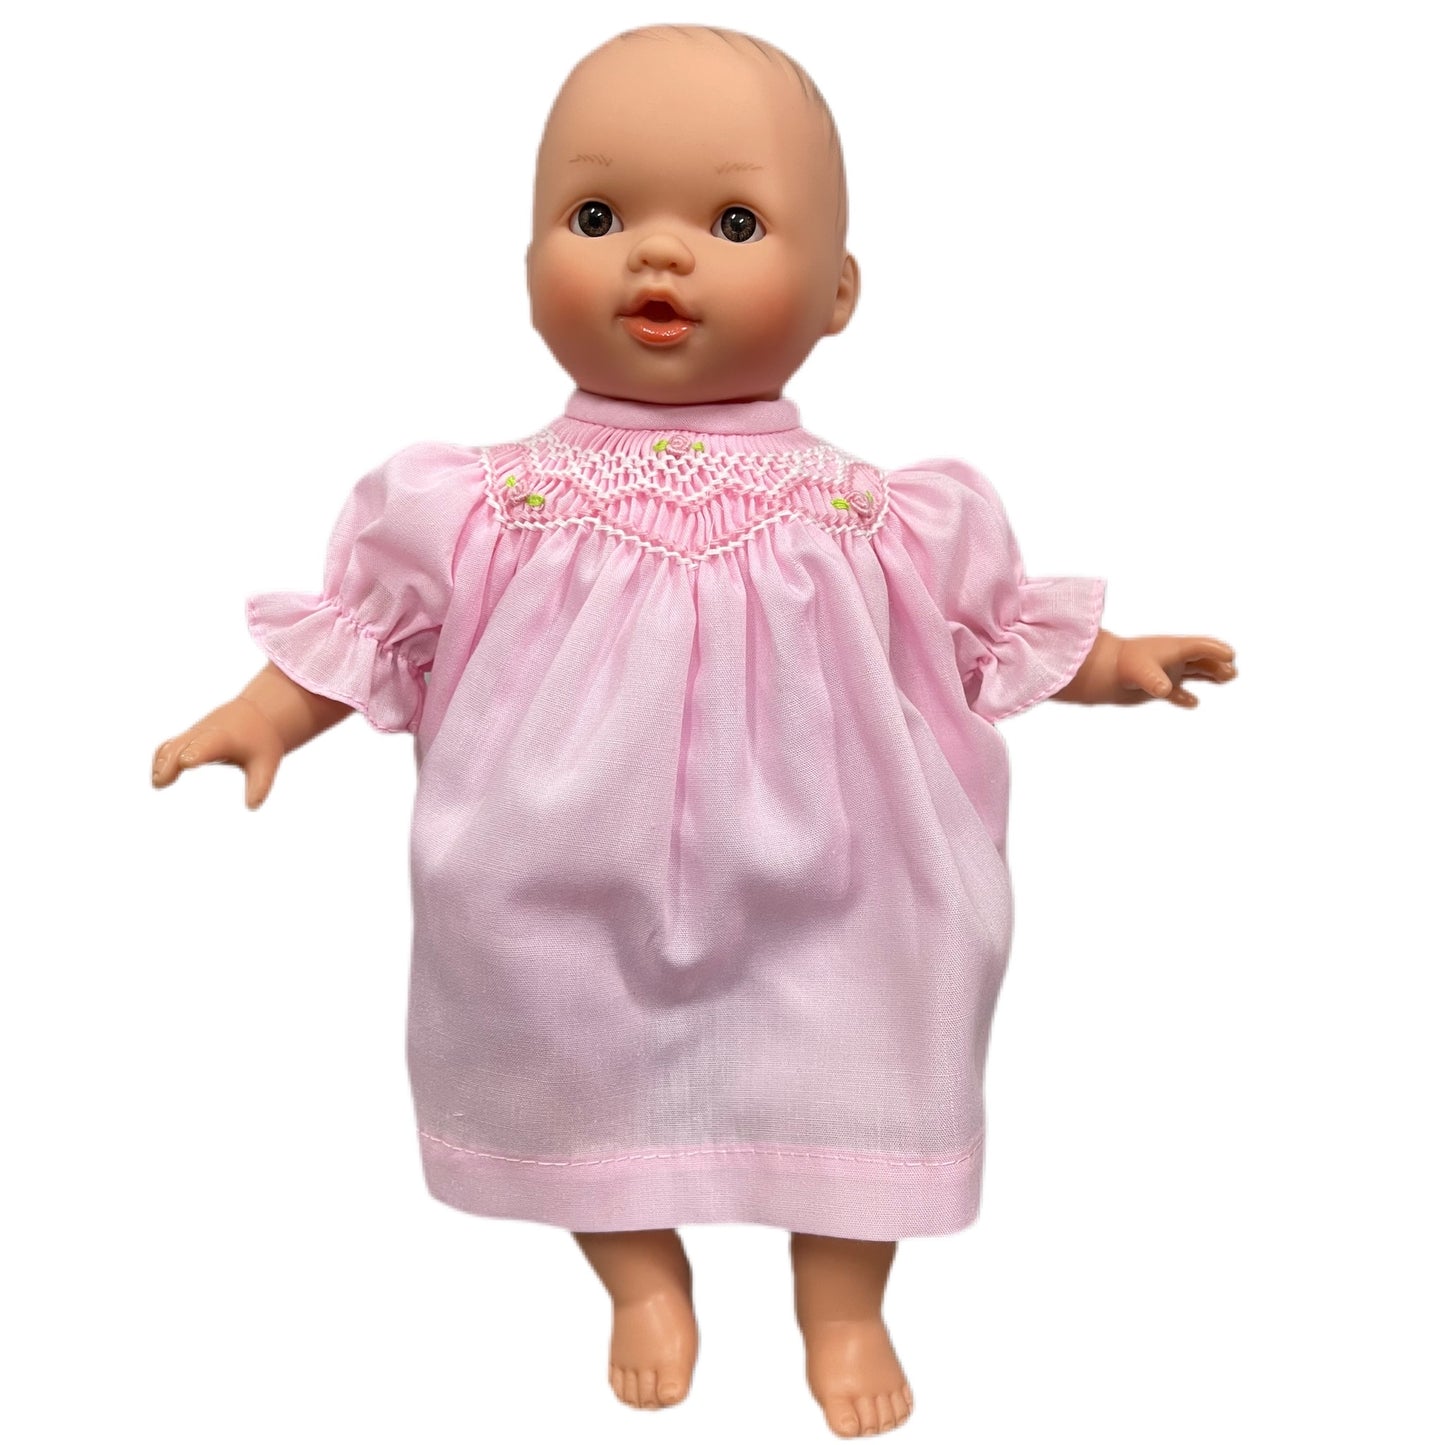 Blue Eye Aubrey Bald Doll Pink Outfit 10”